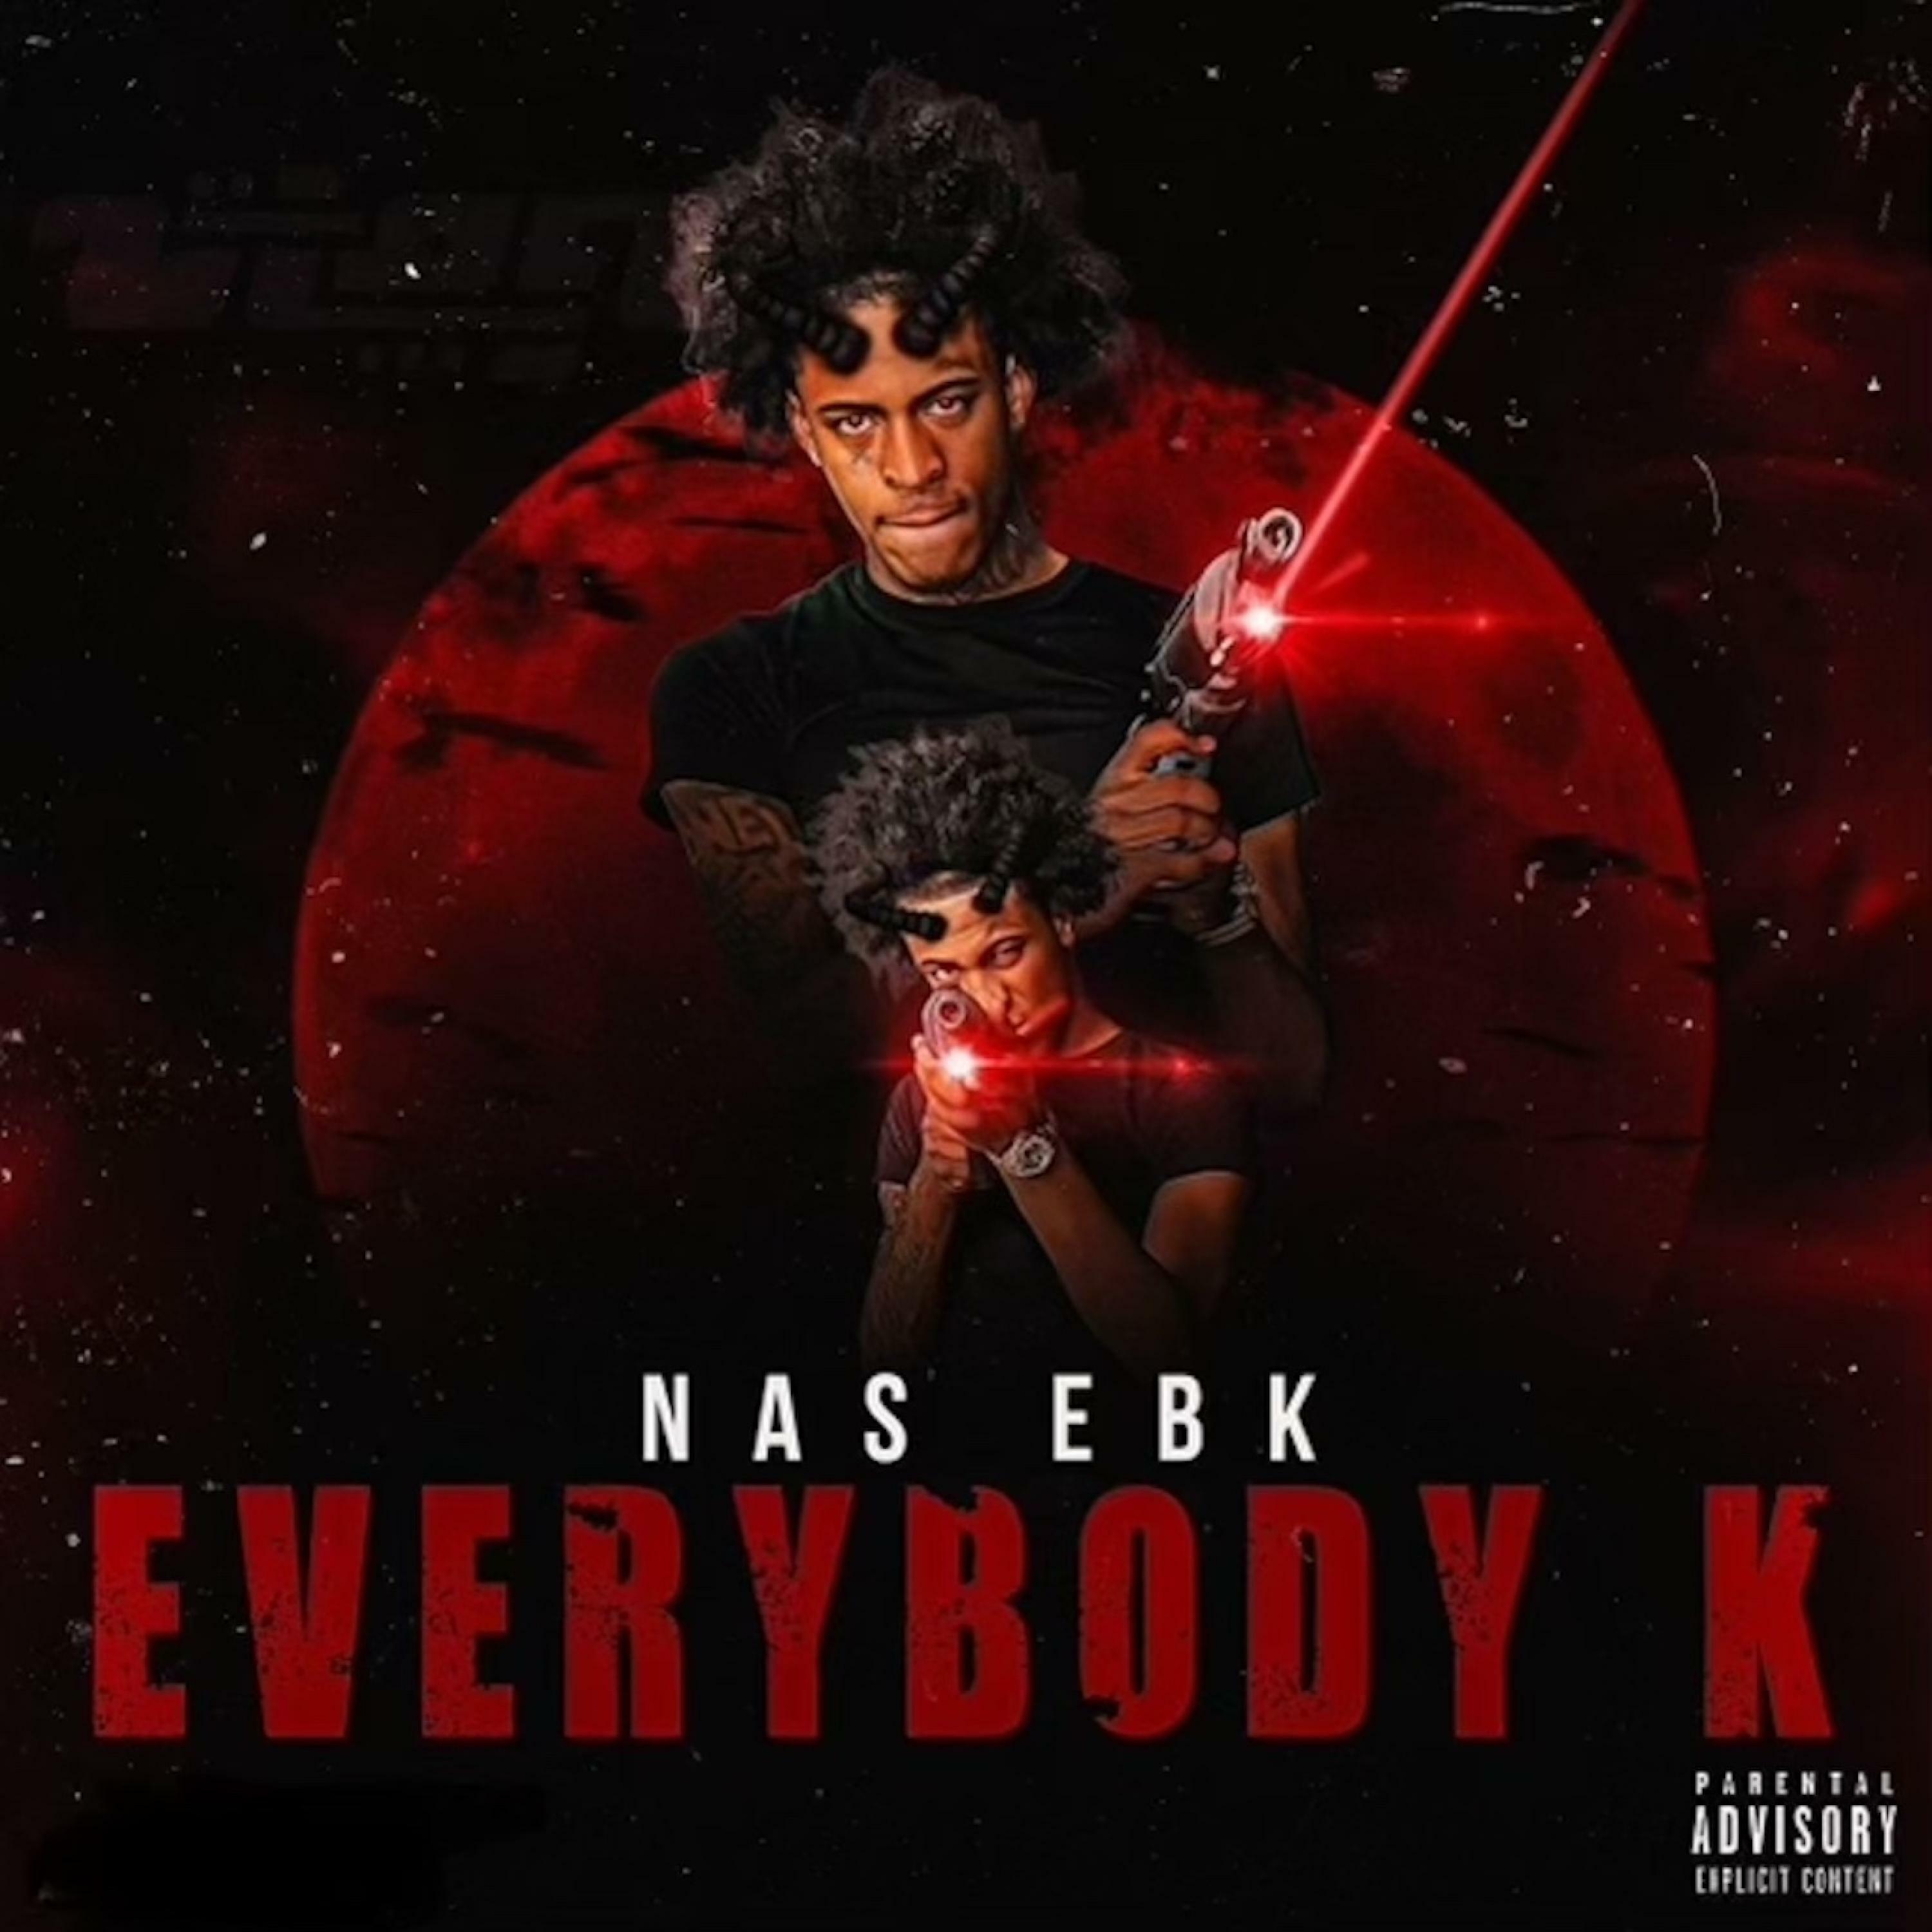 Stream Free Songs by Nas Ebk & Similar Artists